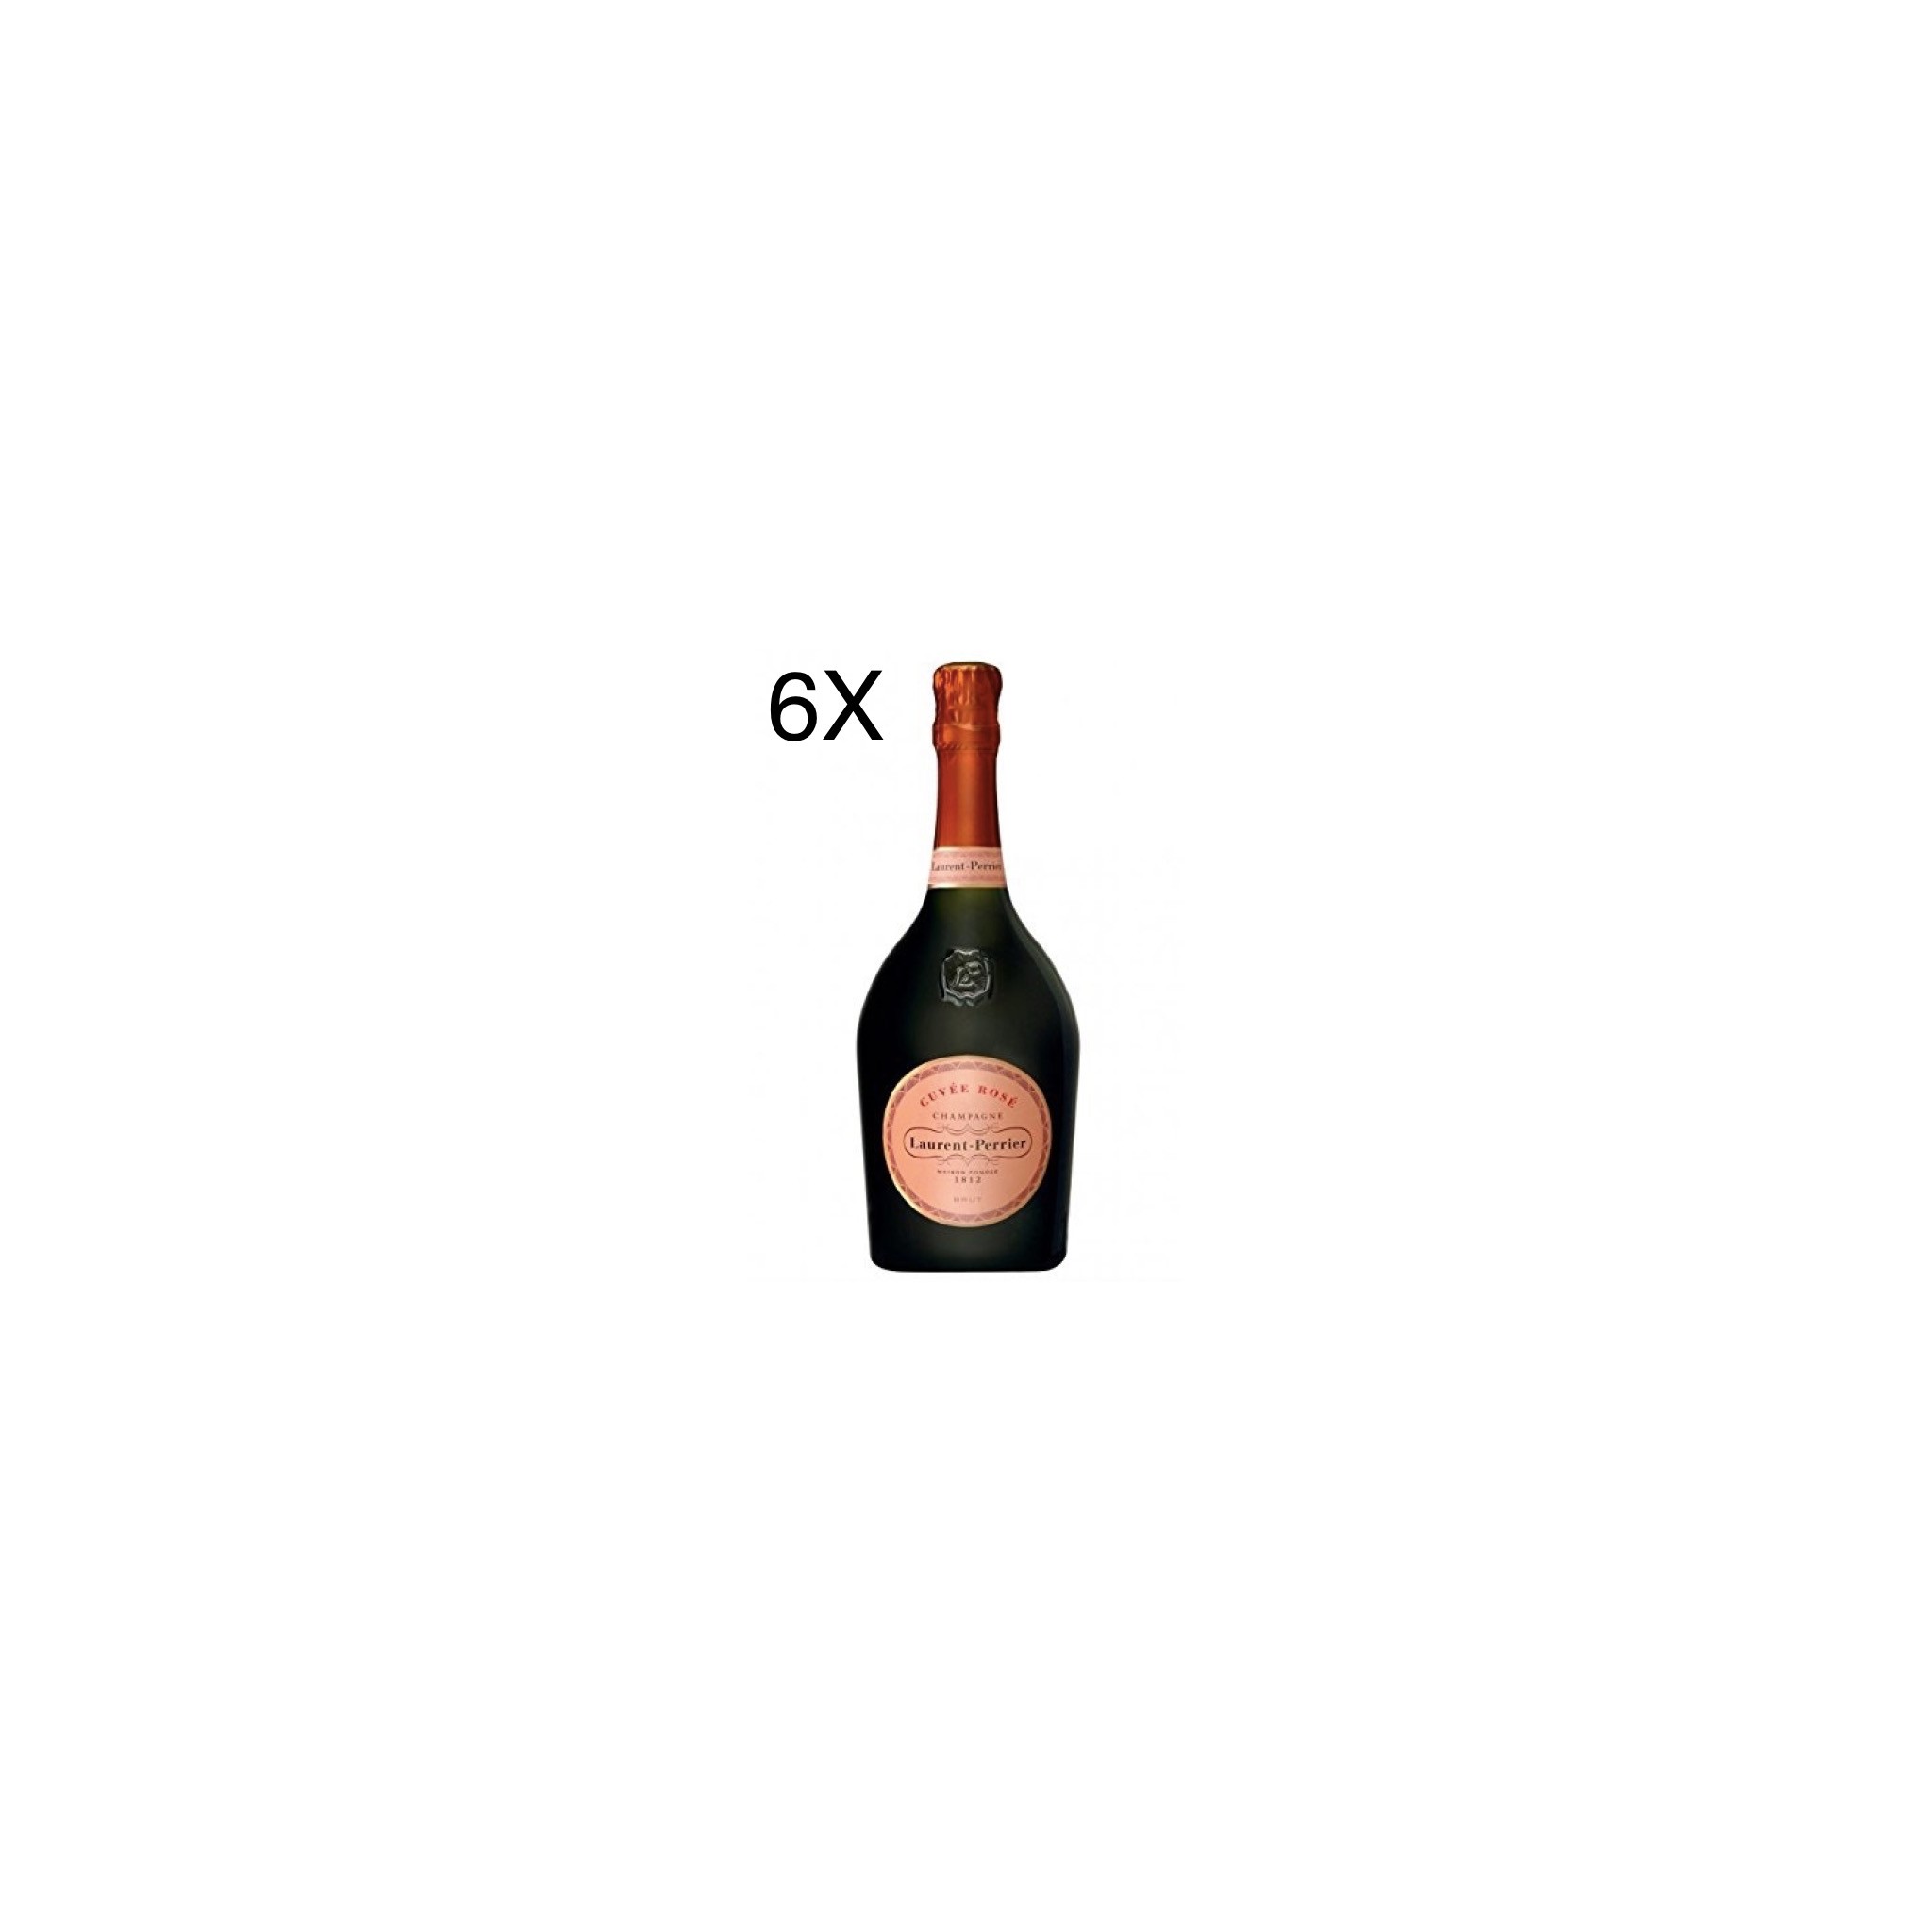 Laurent-Perrier Cuvee Rose Brut - Premier Champagne